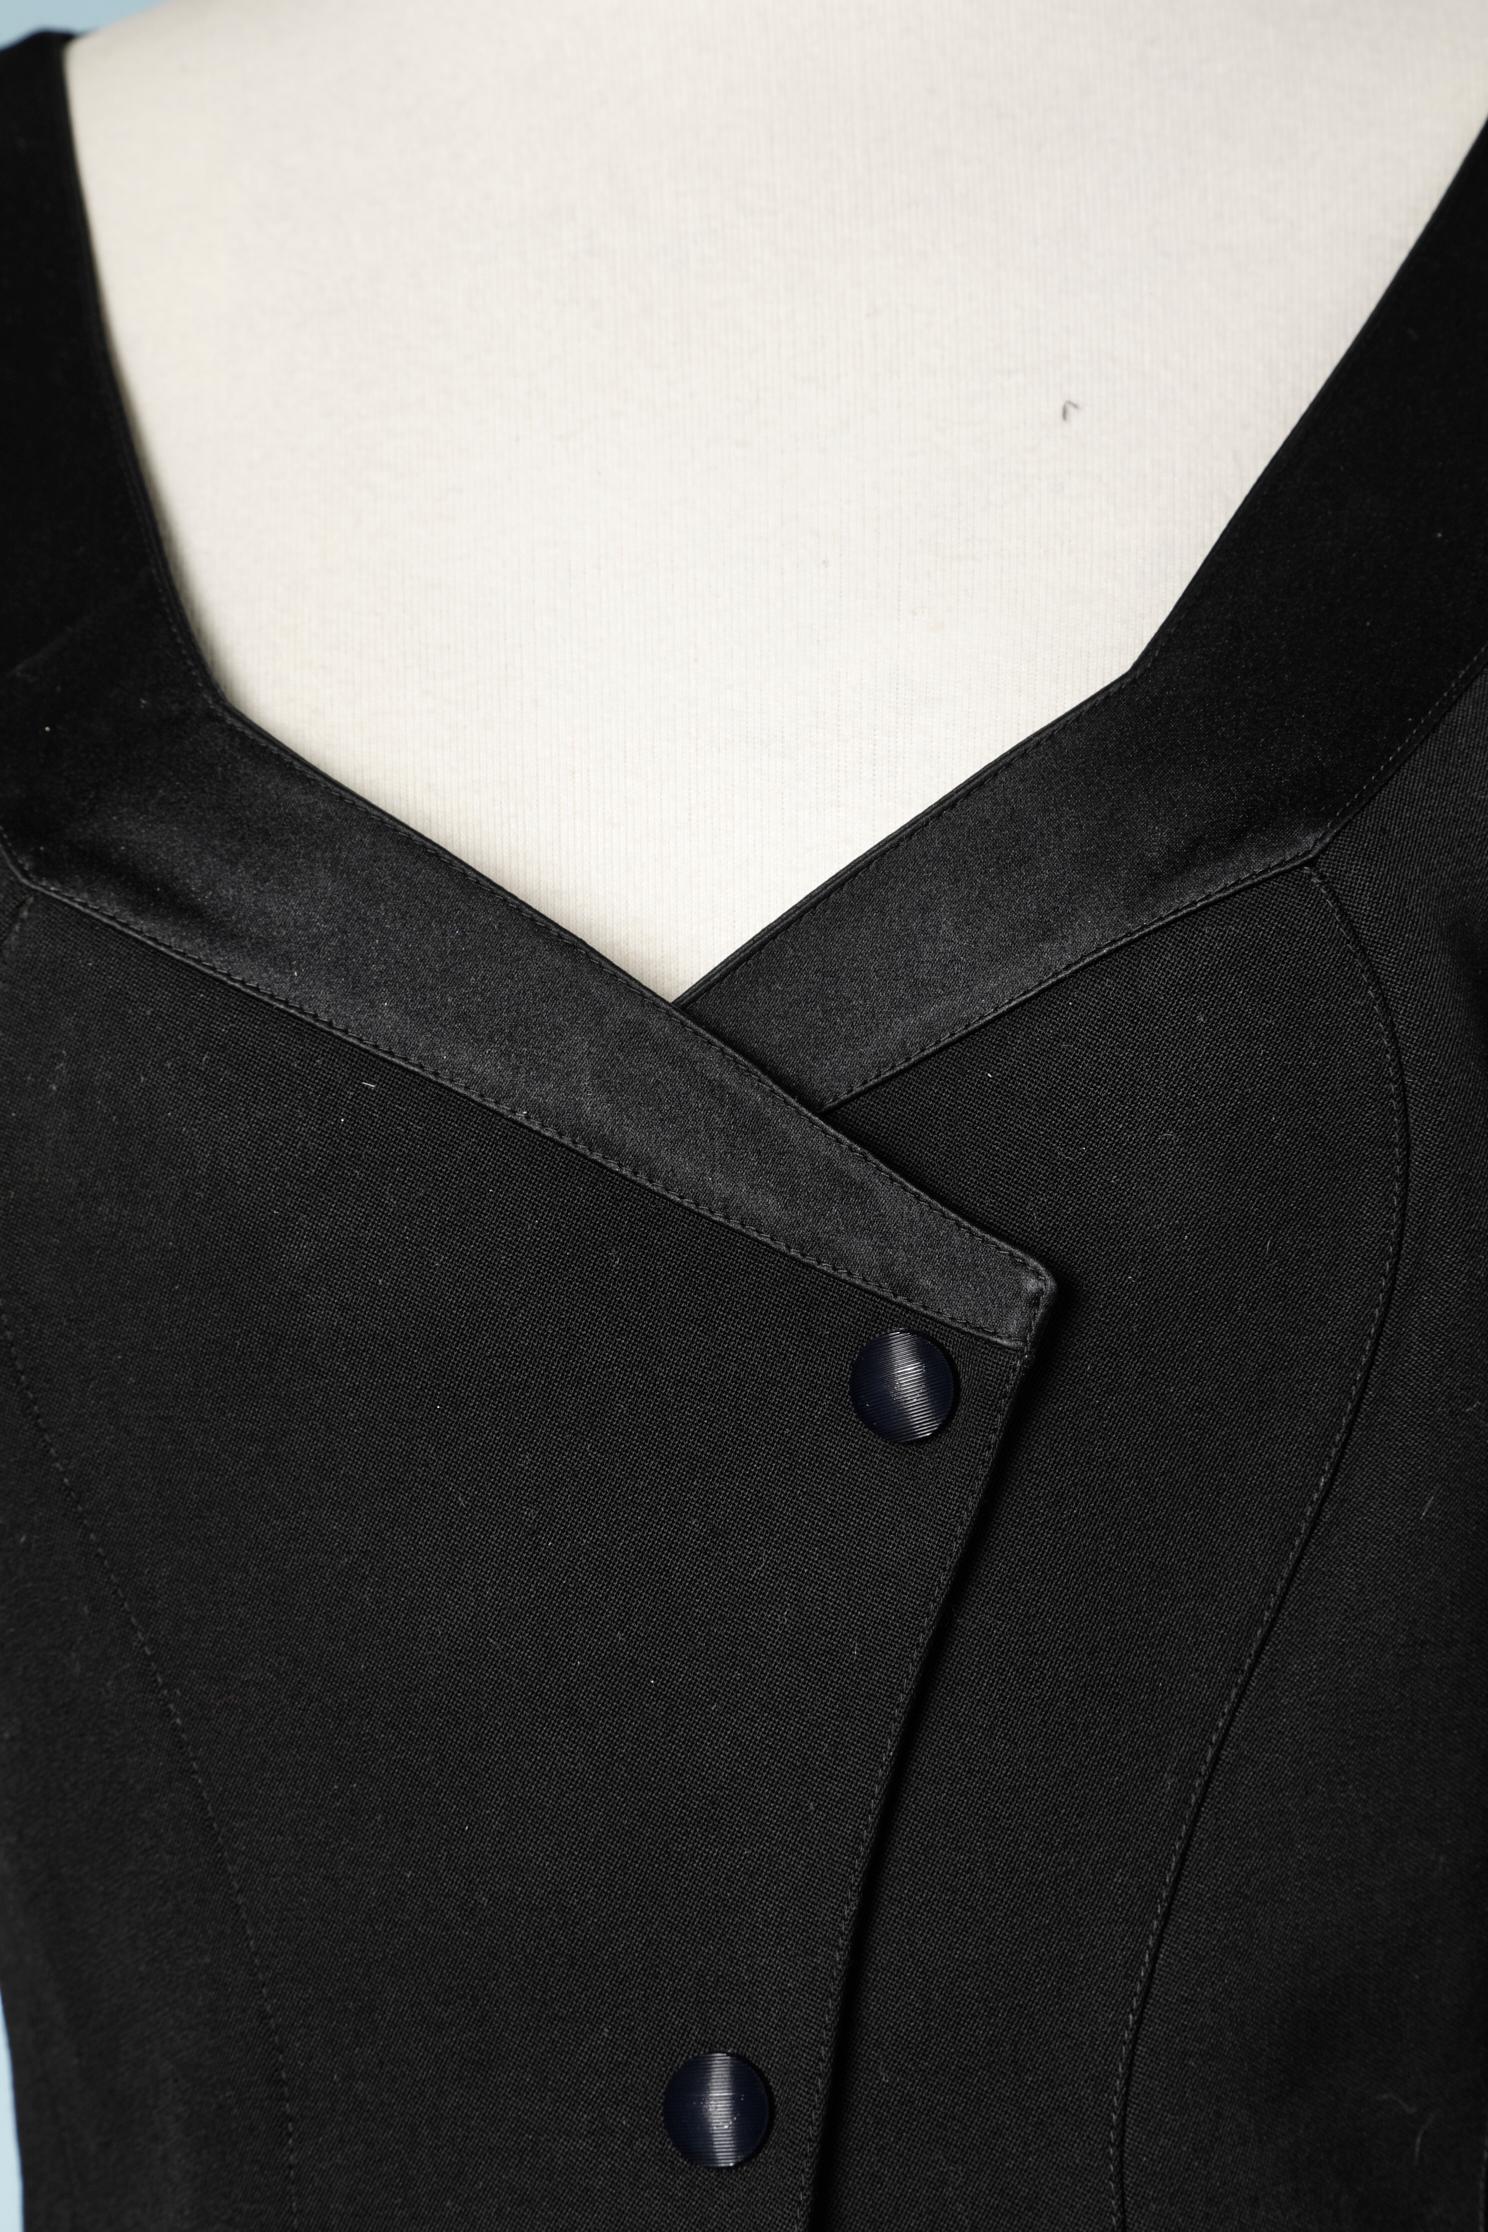 Black wool skirt-suit with black satin details.
Size: 38 ( Fr) 8 ( Us)